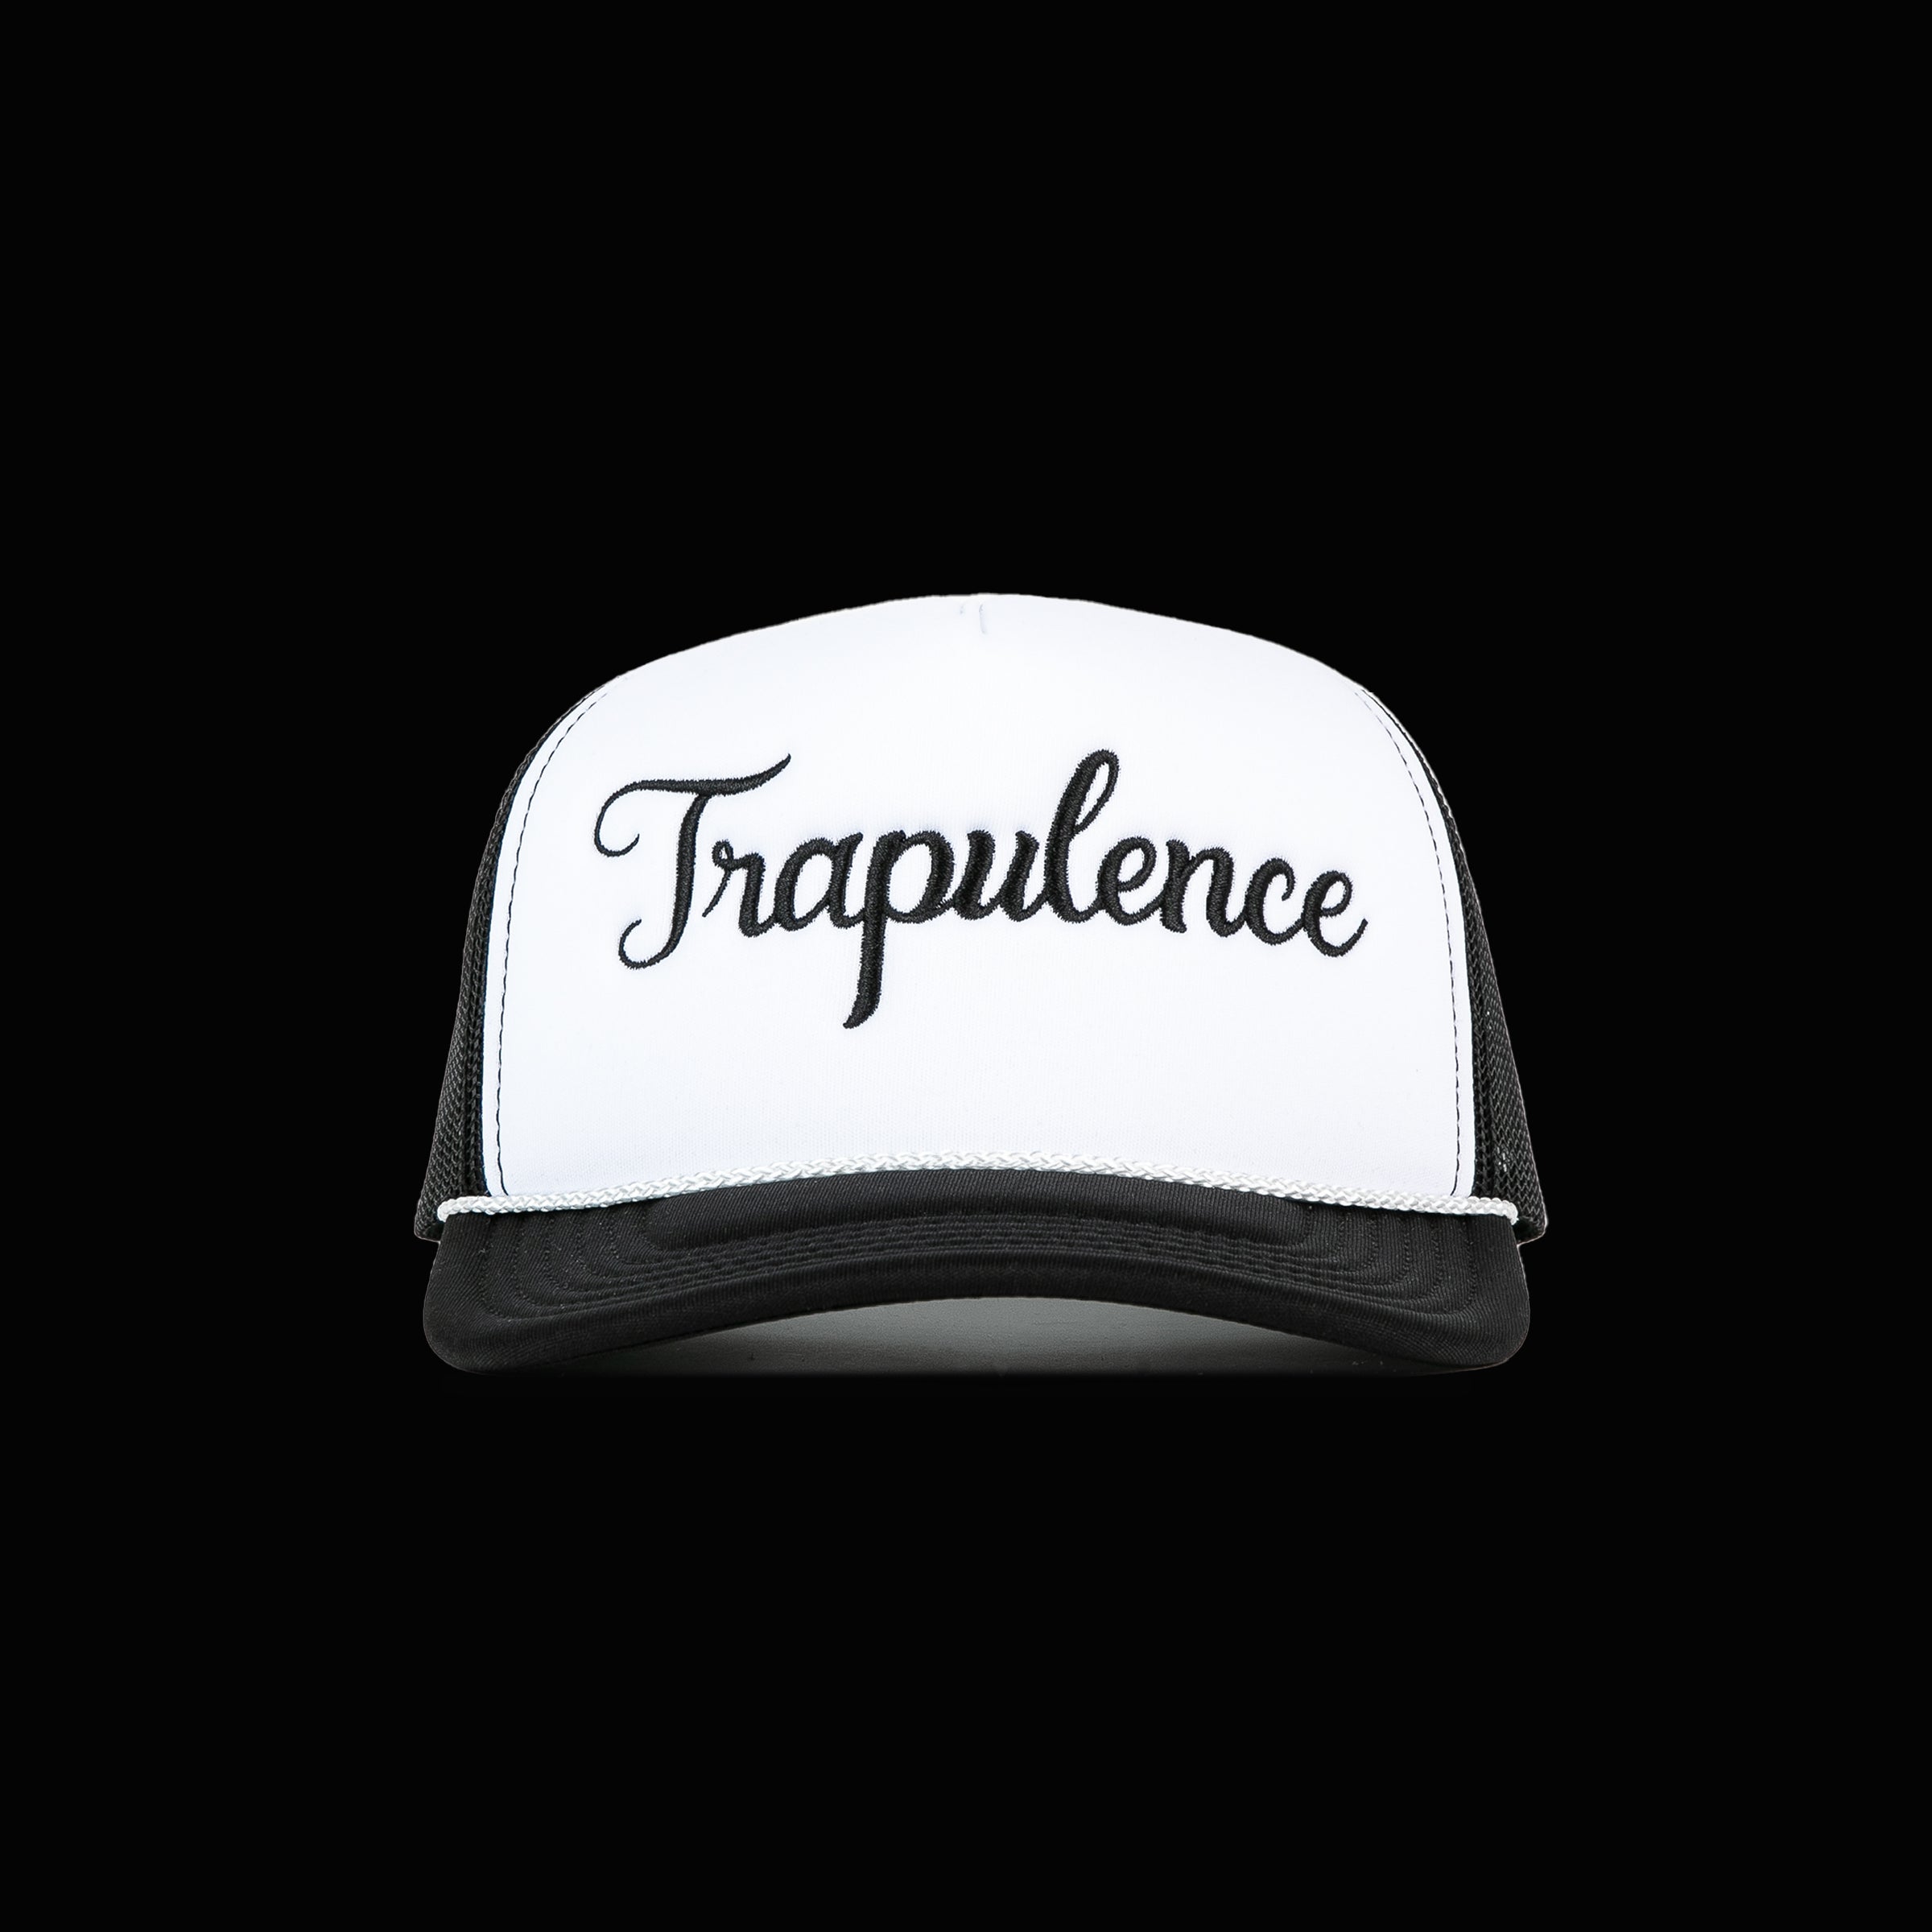 Trapulence-1.jpg